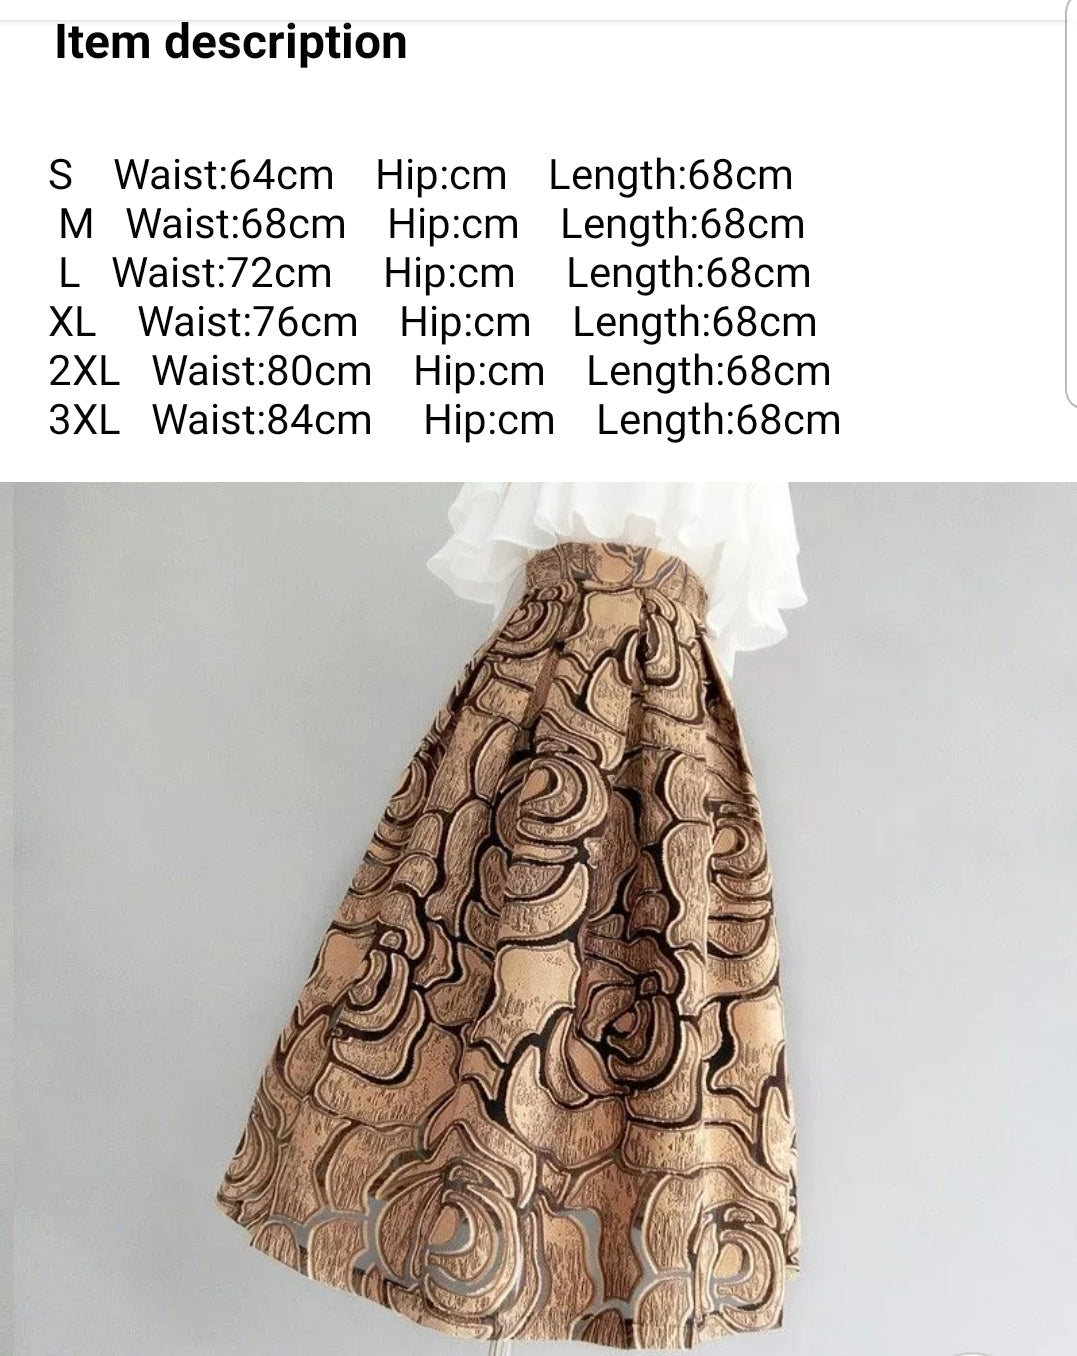 Jacquard Skirt